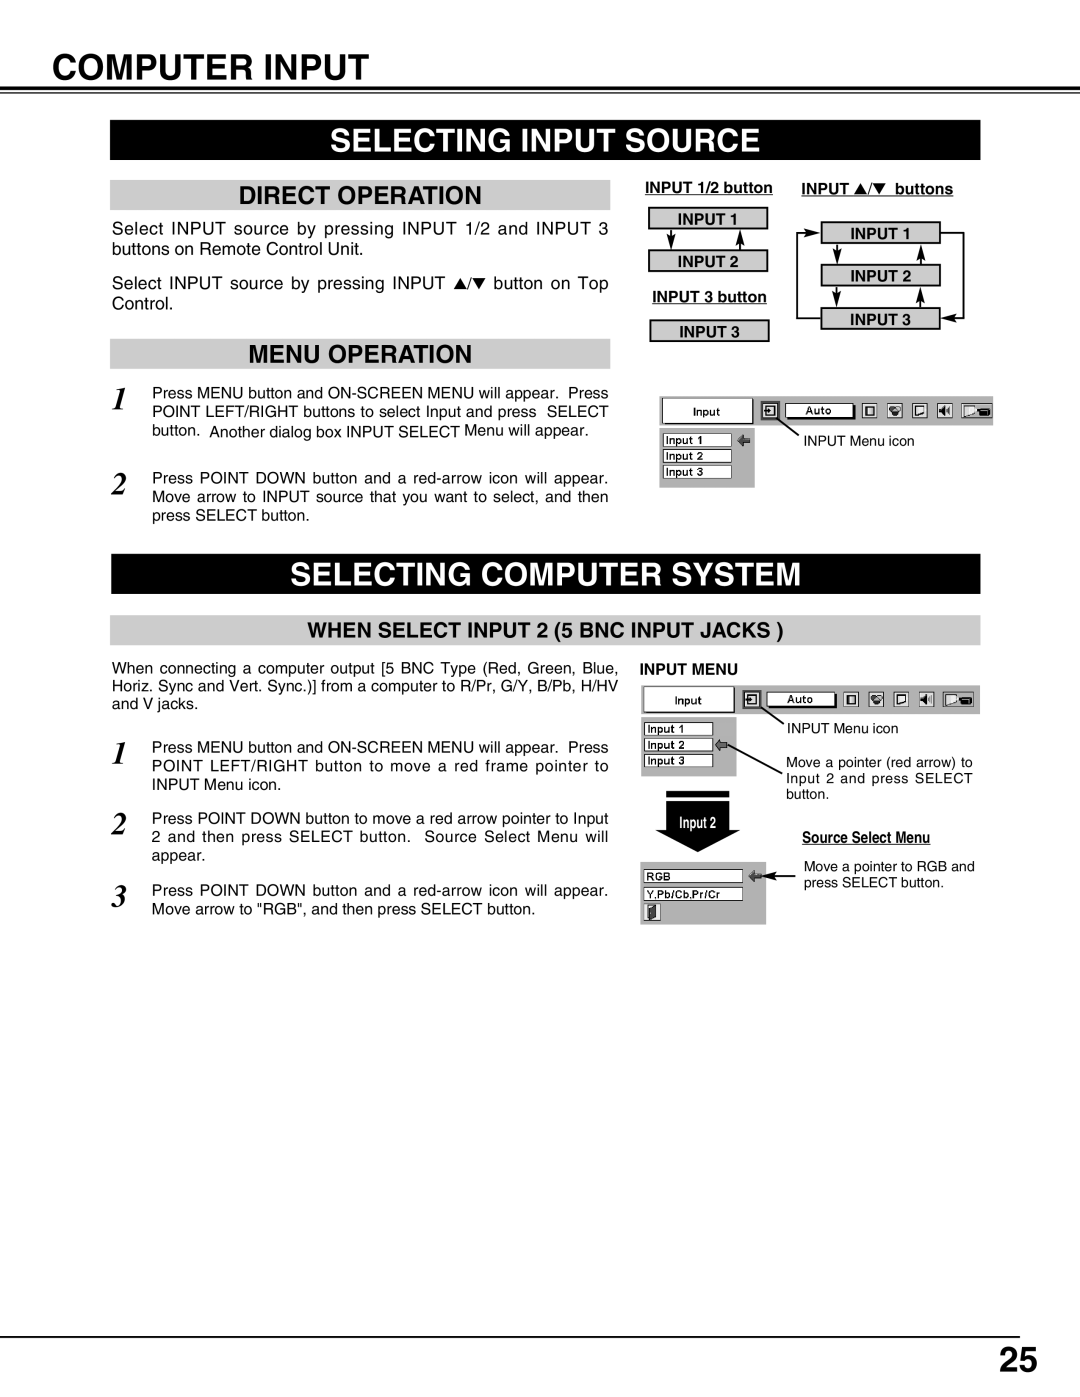 Christie Digital Systems 38-VIV302-01 Computer Input, Selecting Input Source, Selecting Computer System, Direct Operation 